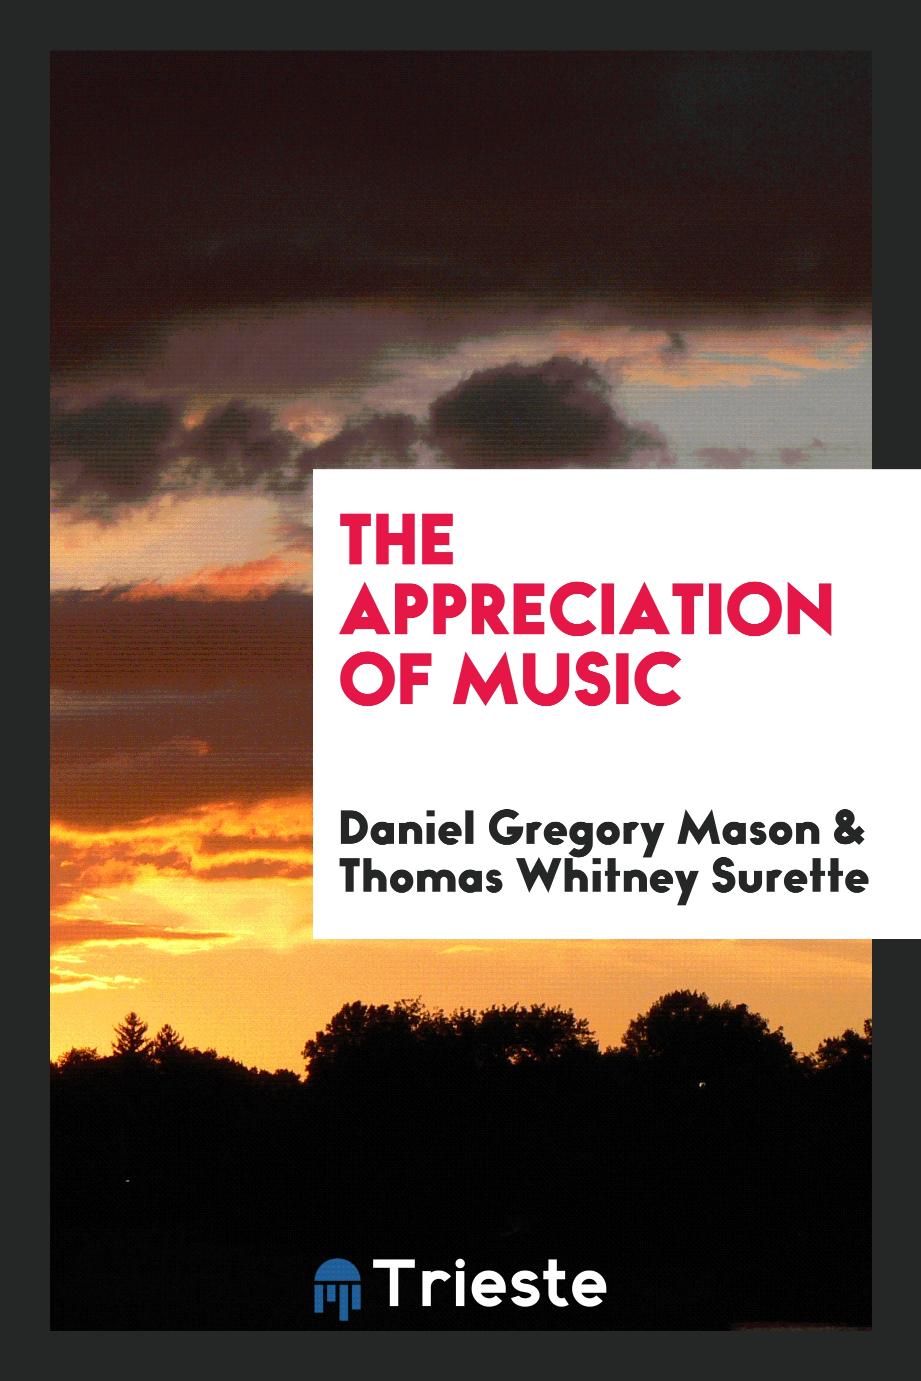 The appreciation of music